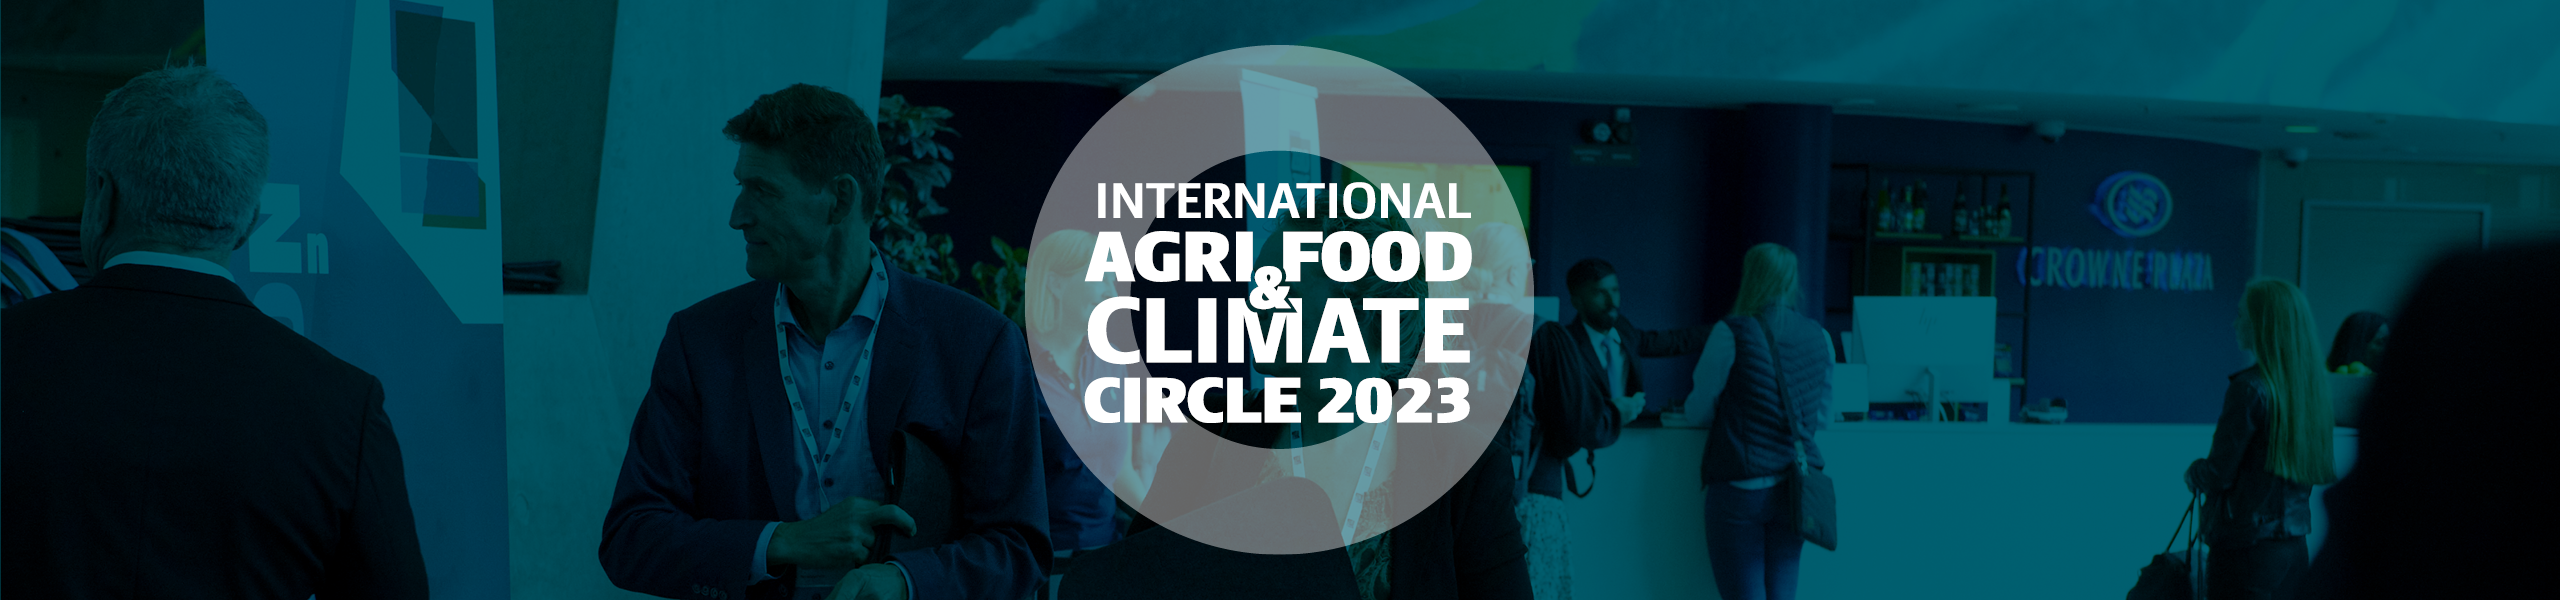 International Agri-Food & Climate Circle 2023